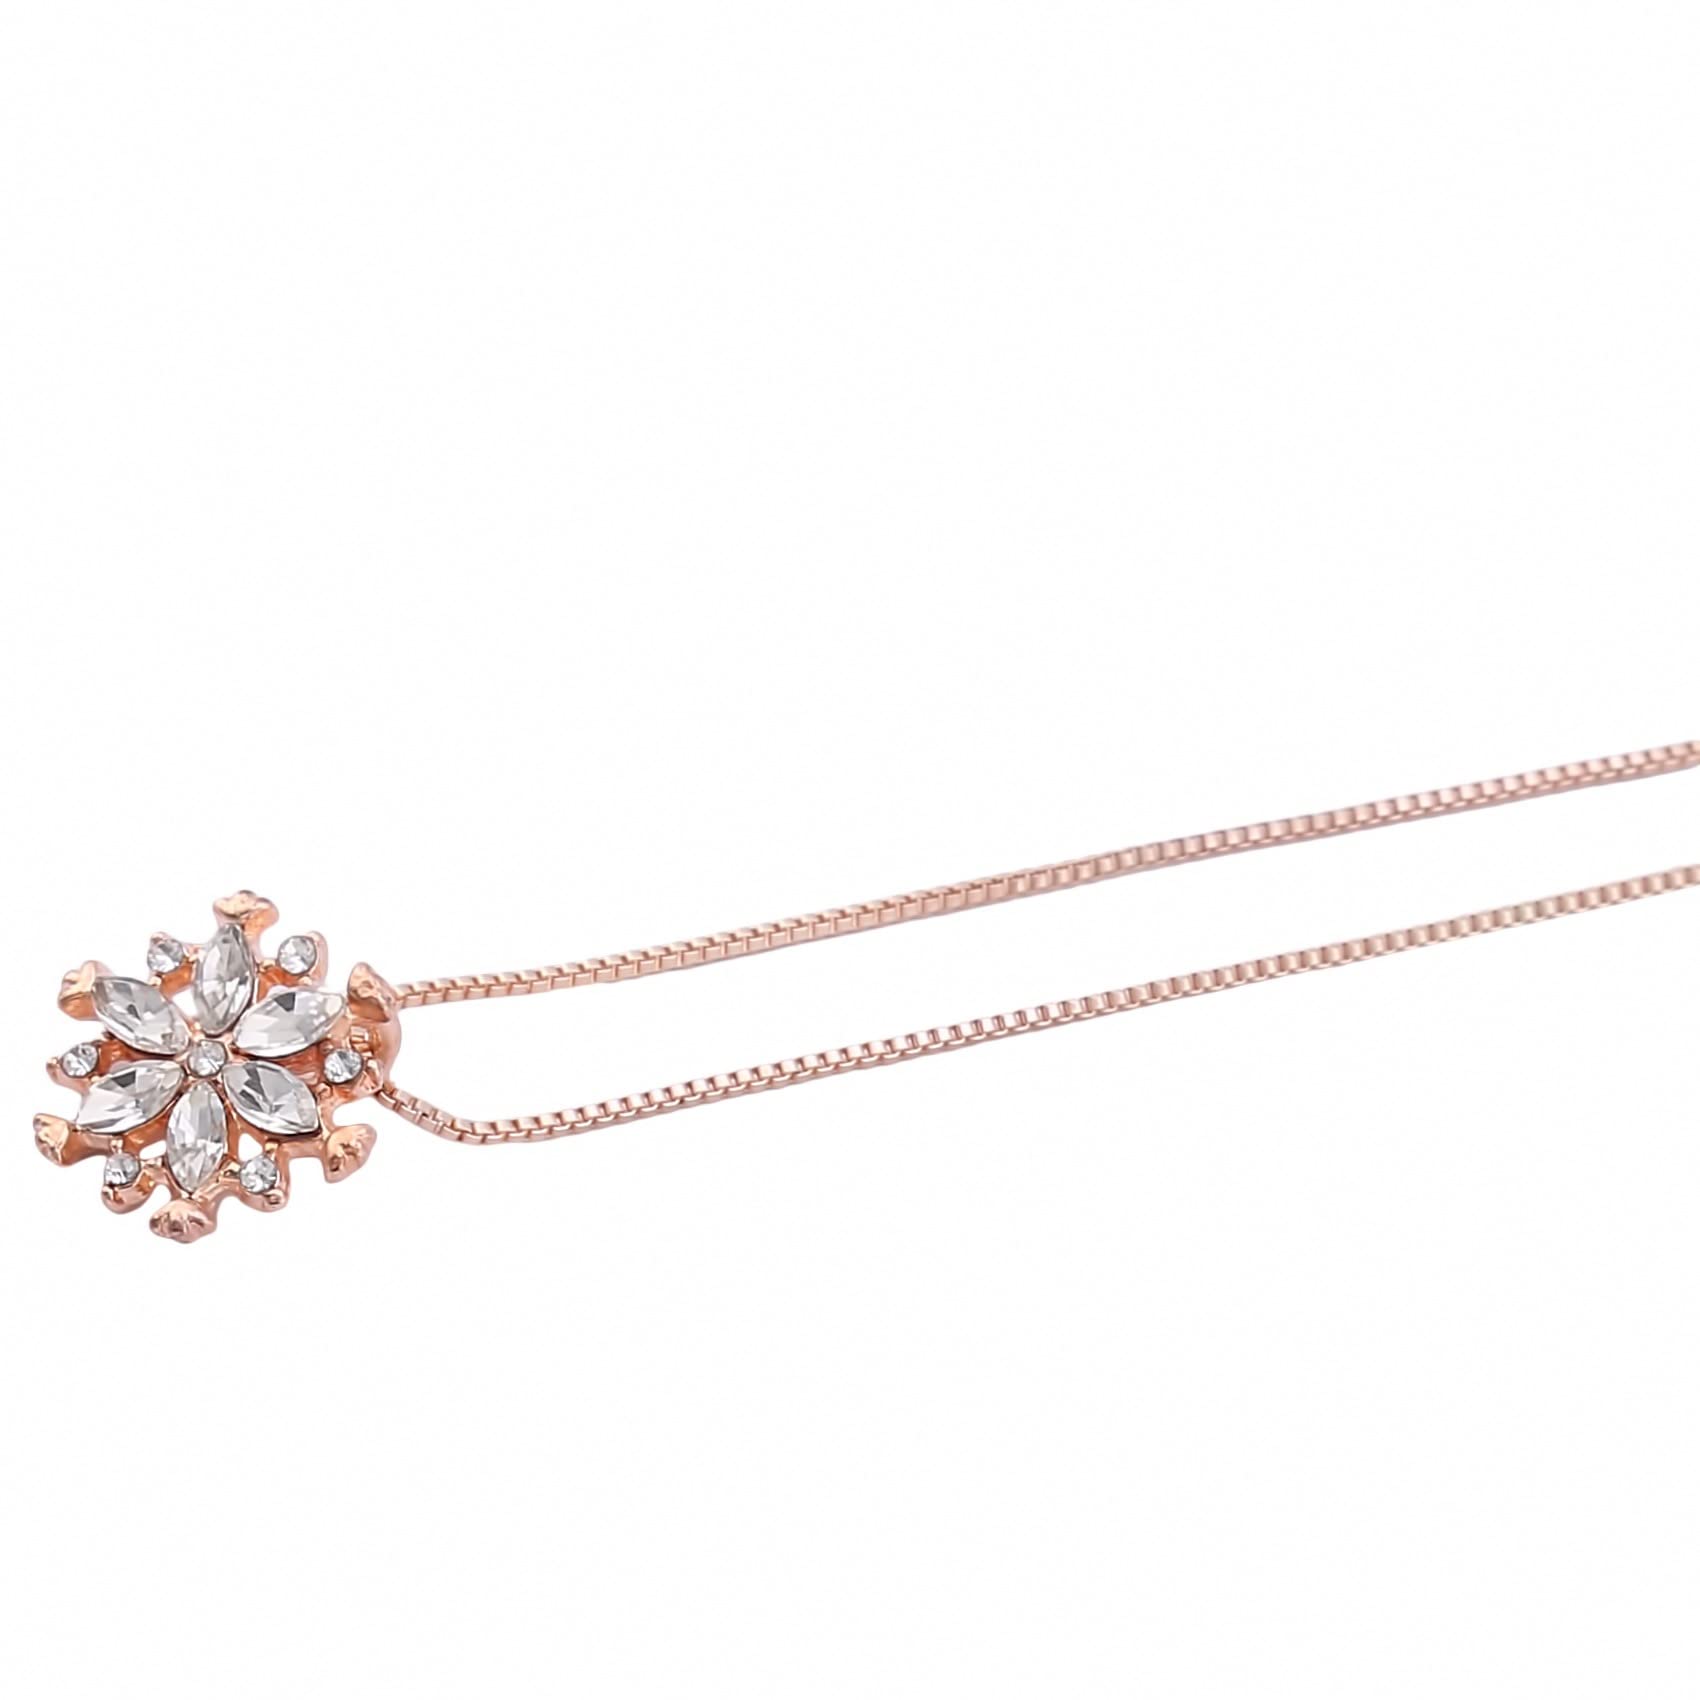 Iumer Snowflake Necklace Women Pendant Inlaid Rhinestone Clavicle Chain